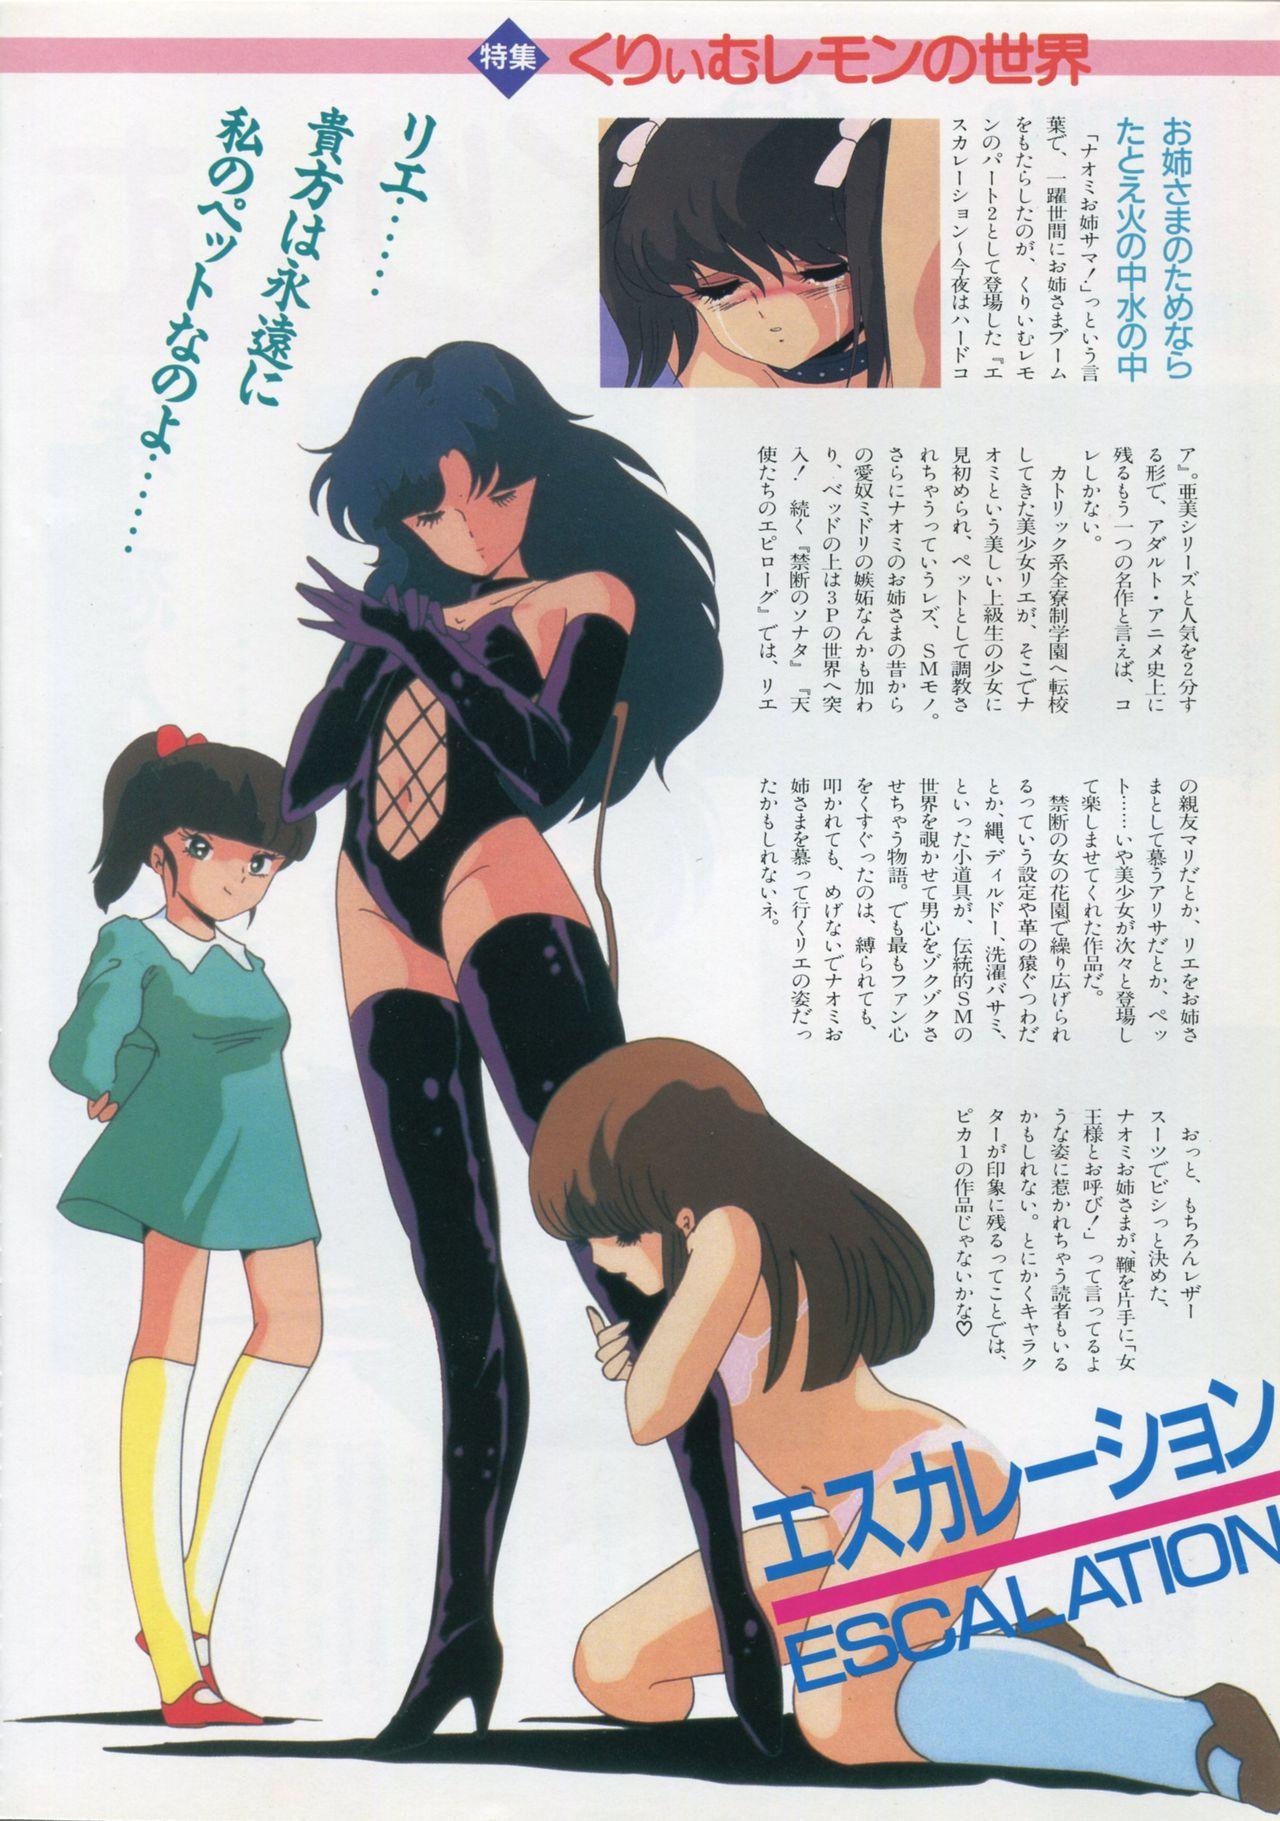 Bishoujo Anime Daizenshuu - Adult Animation Video Catalog 1991 13